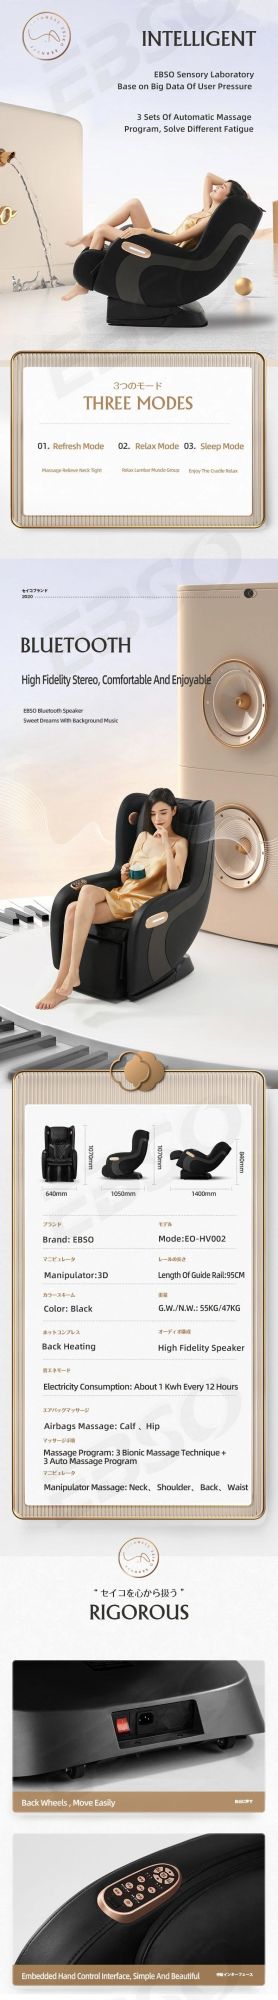 New Design Luxury Cheap 4D Zero Gravity Full Body Care Electric Massage Chair Vending Massage Chair